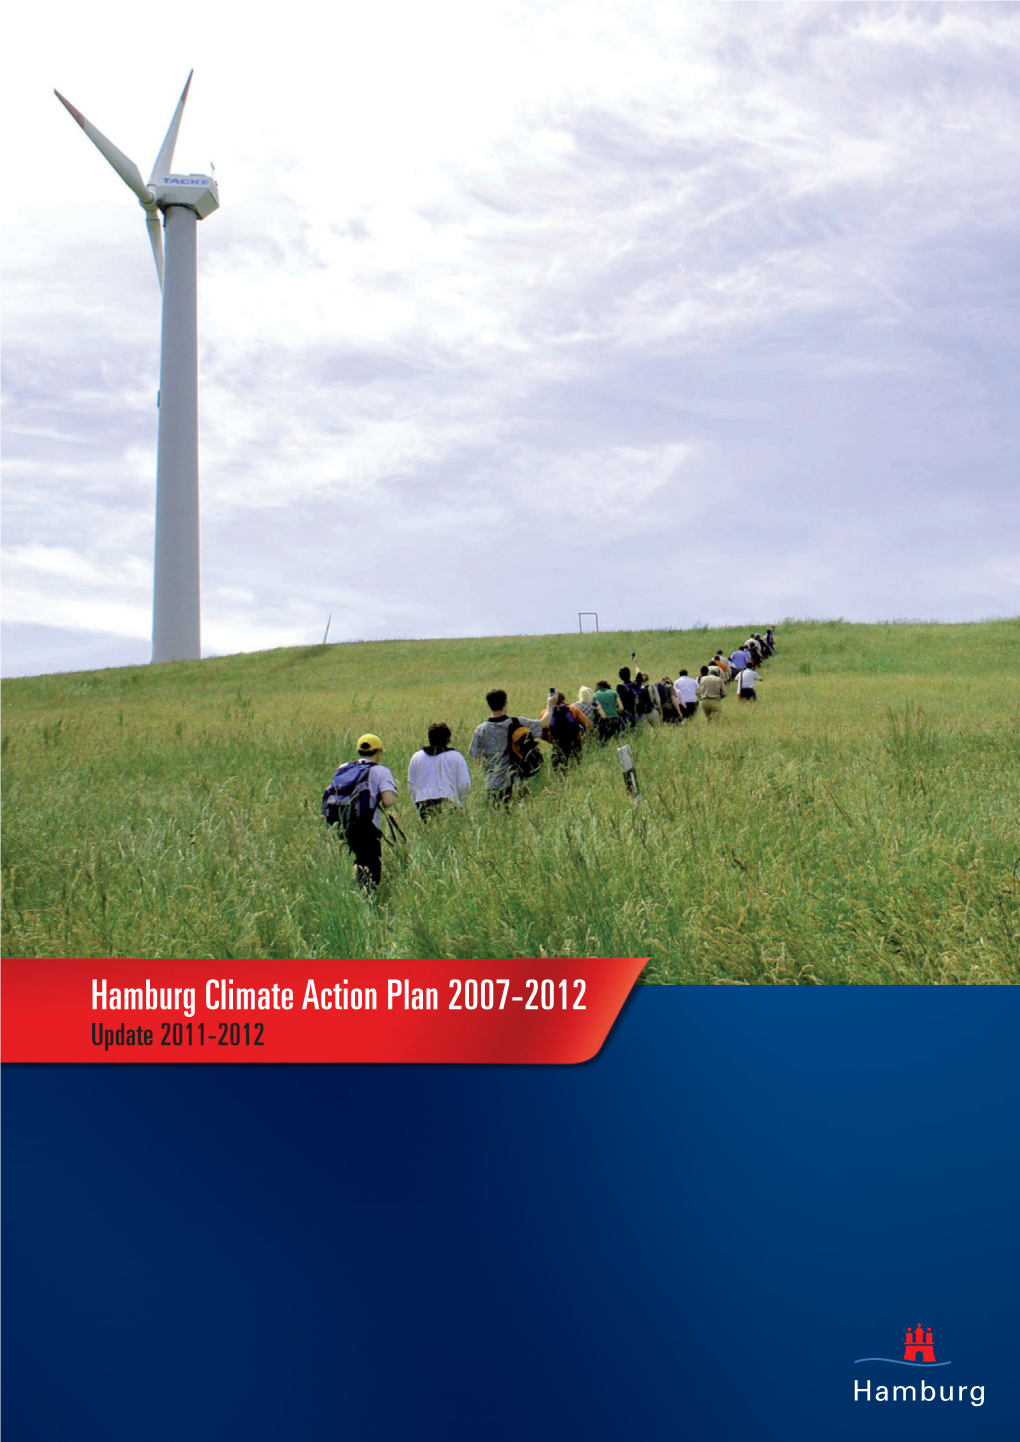 Hamburg Climate Action Plan 2007-2012 Update 2011-2012